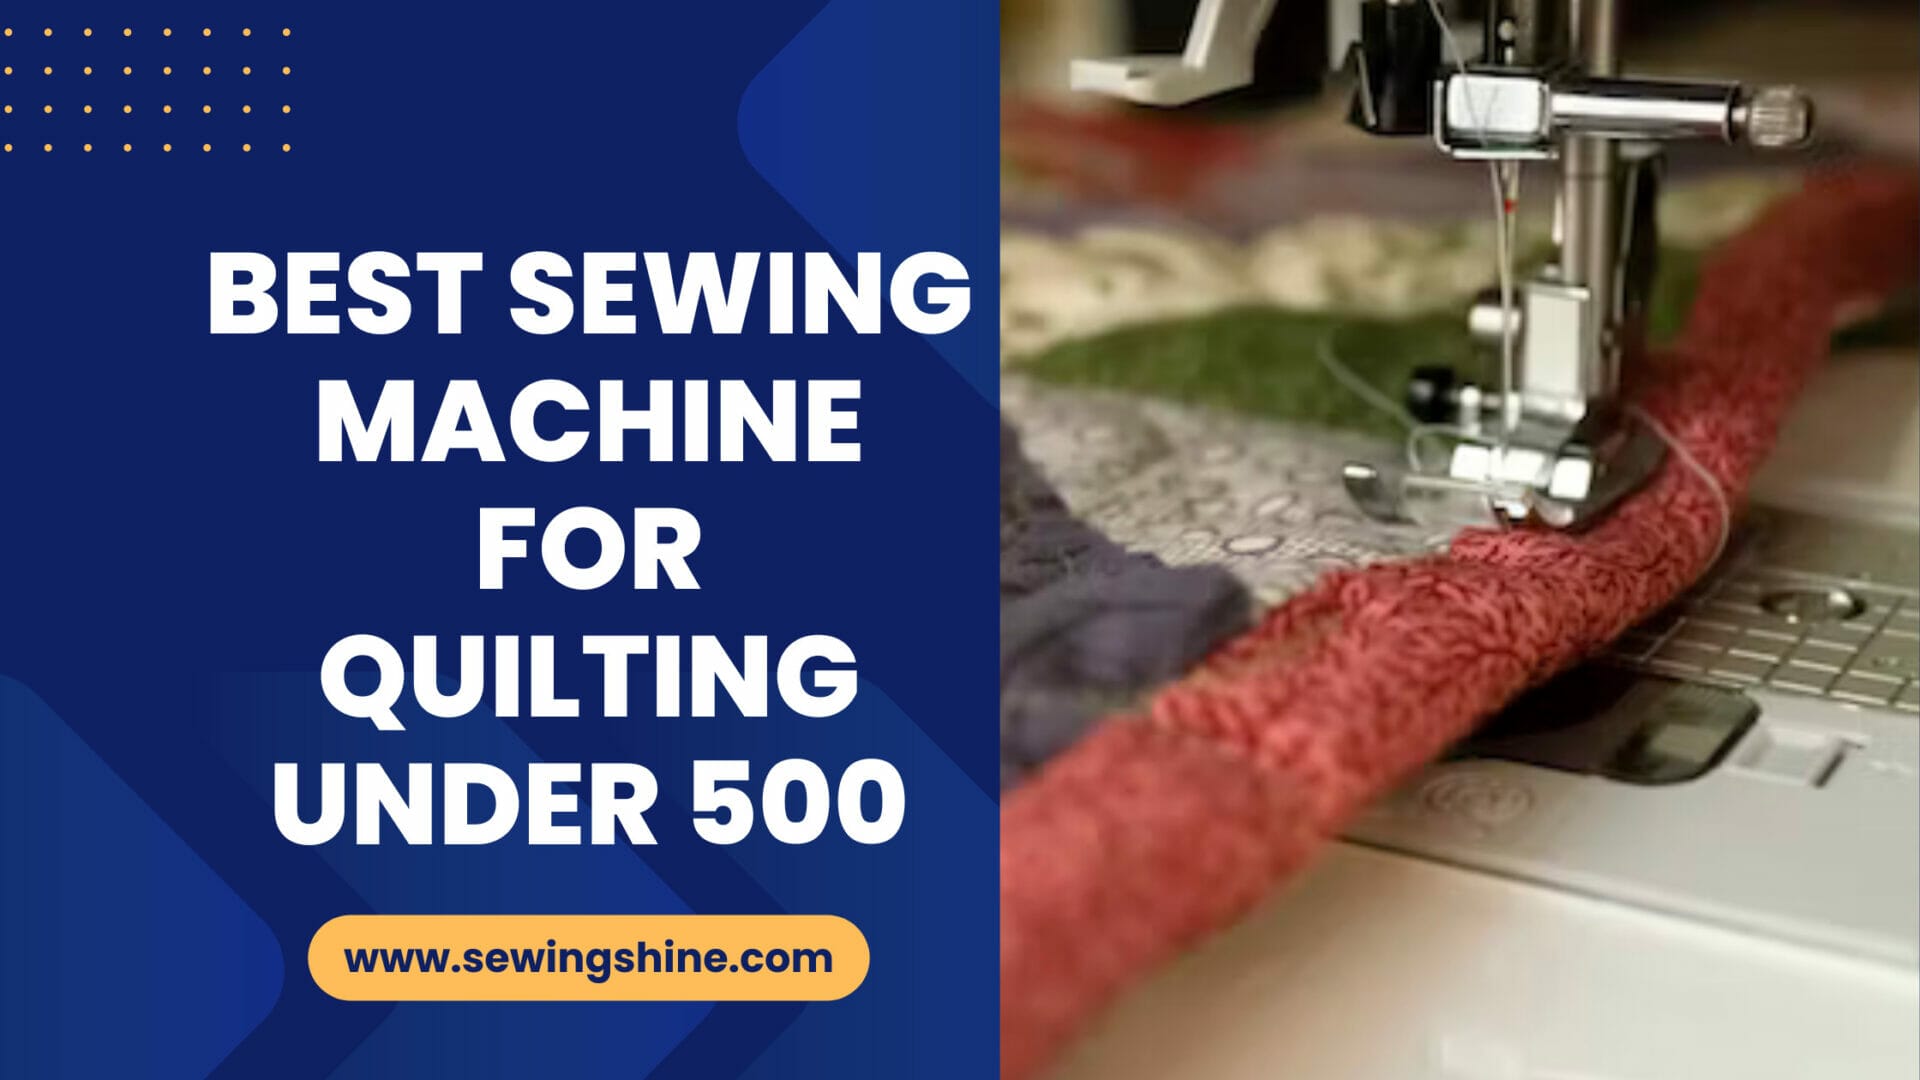 Best Sewing Machine For Quilting Under 500